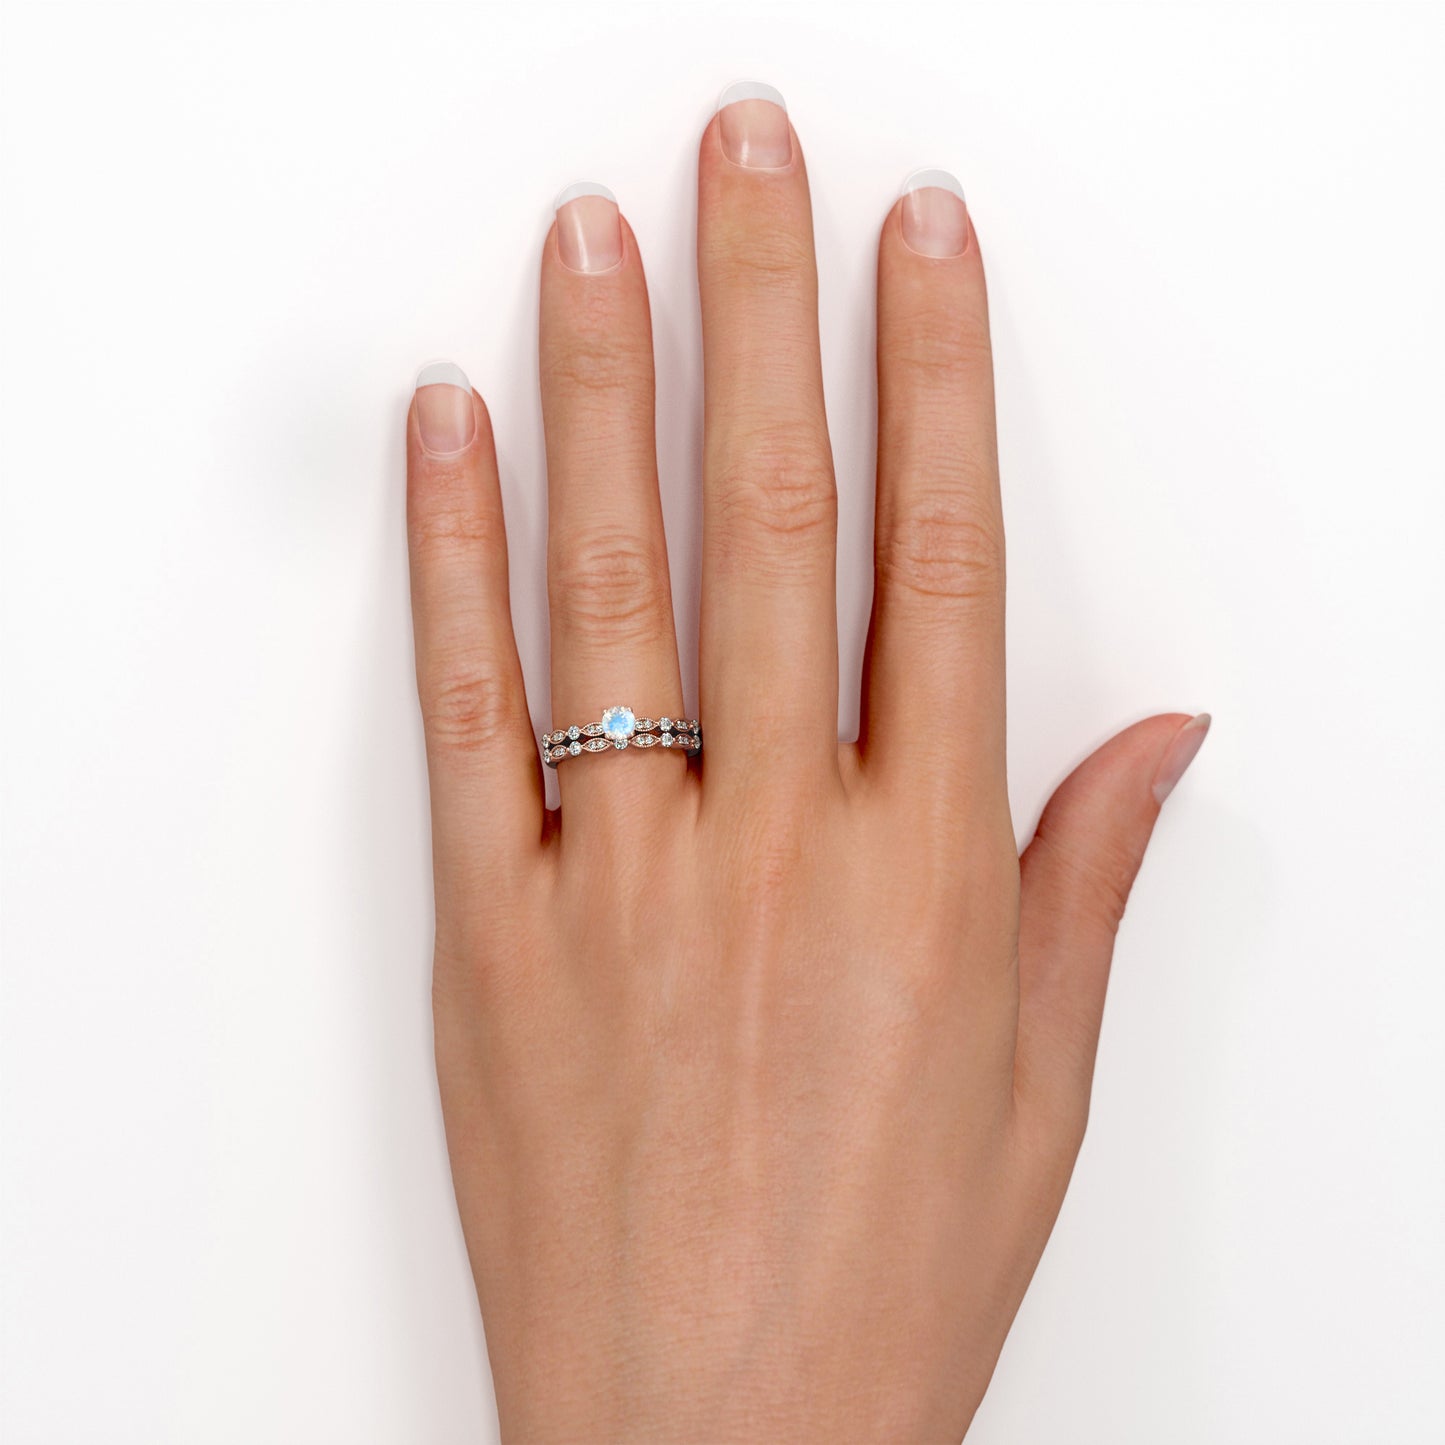 Classic Milgrain Bead style 0.85 carat Round cut Rainbow Moonstone and diamond engagement ring in Rose gold